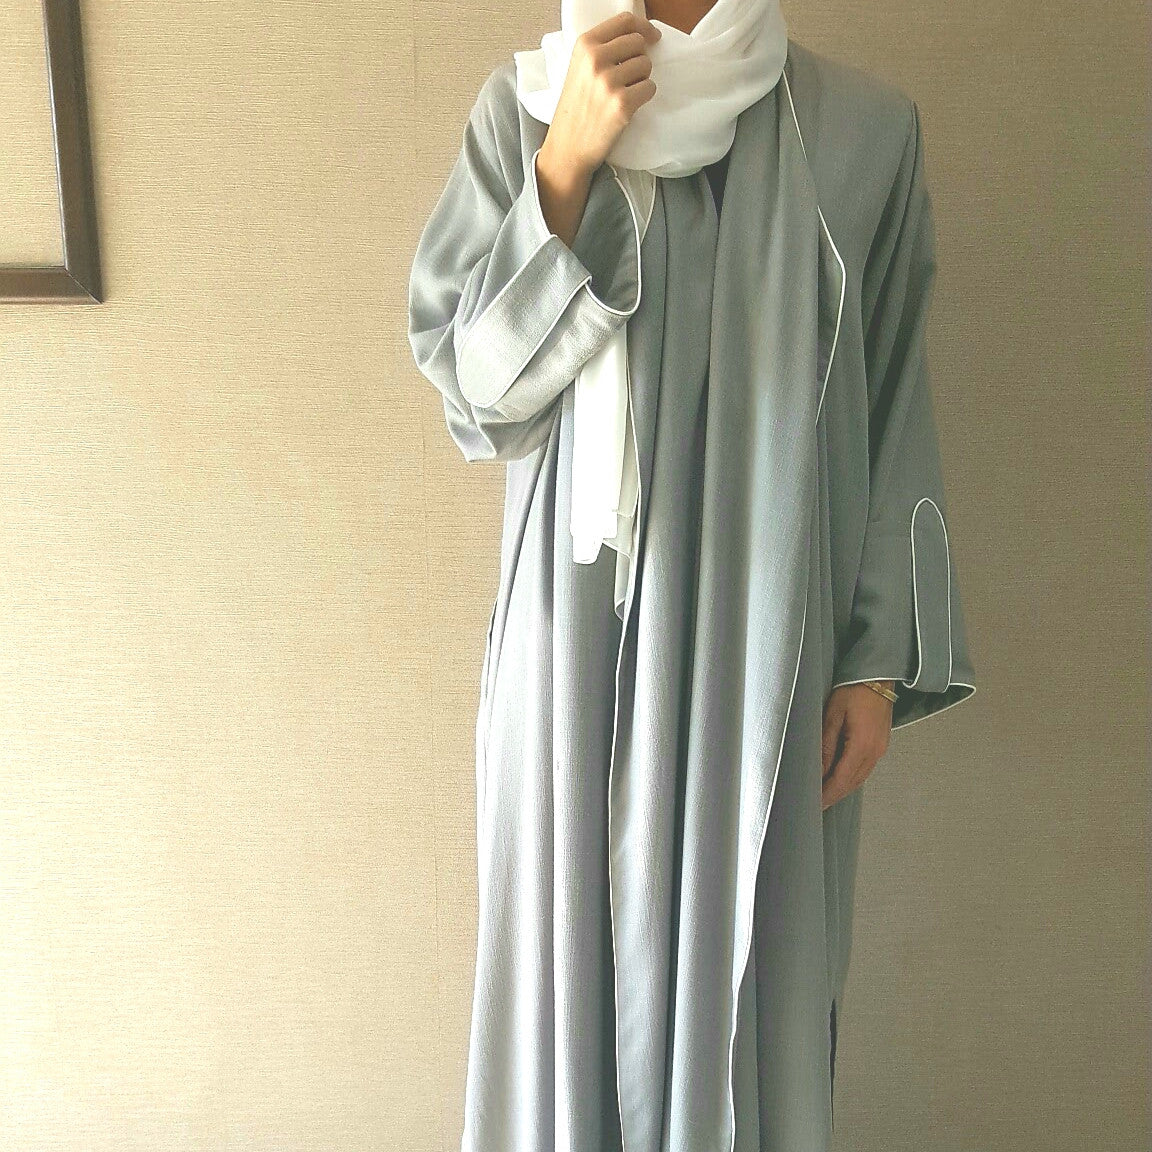 Stylish Grey Linen Abaya with White Piping